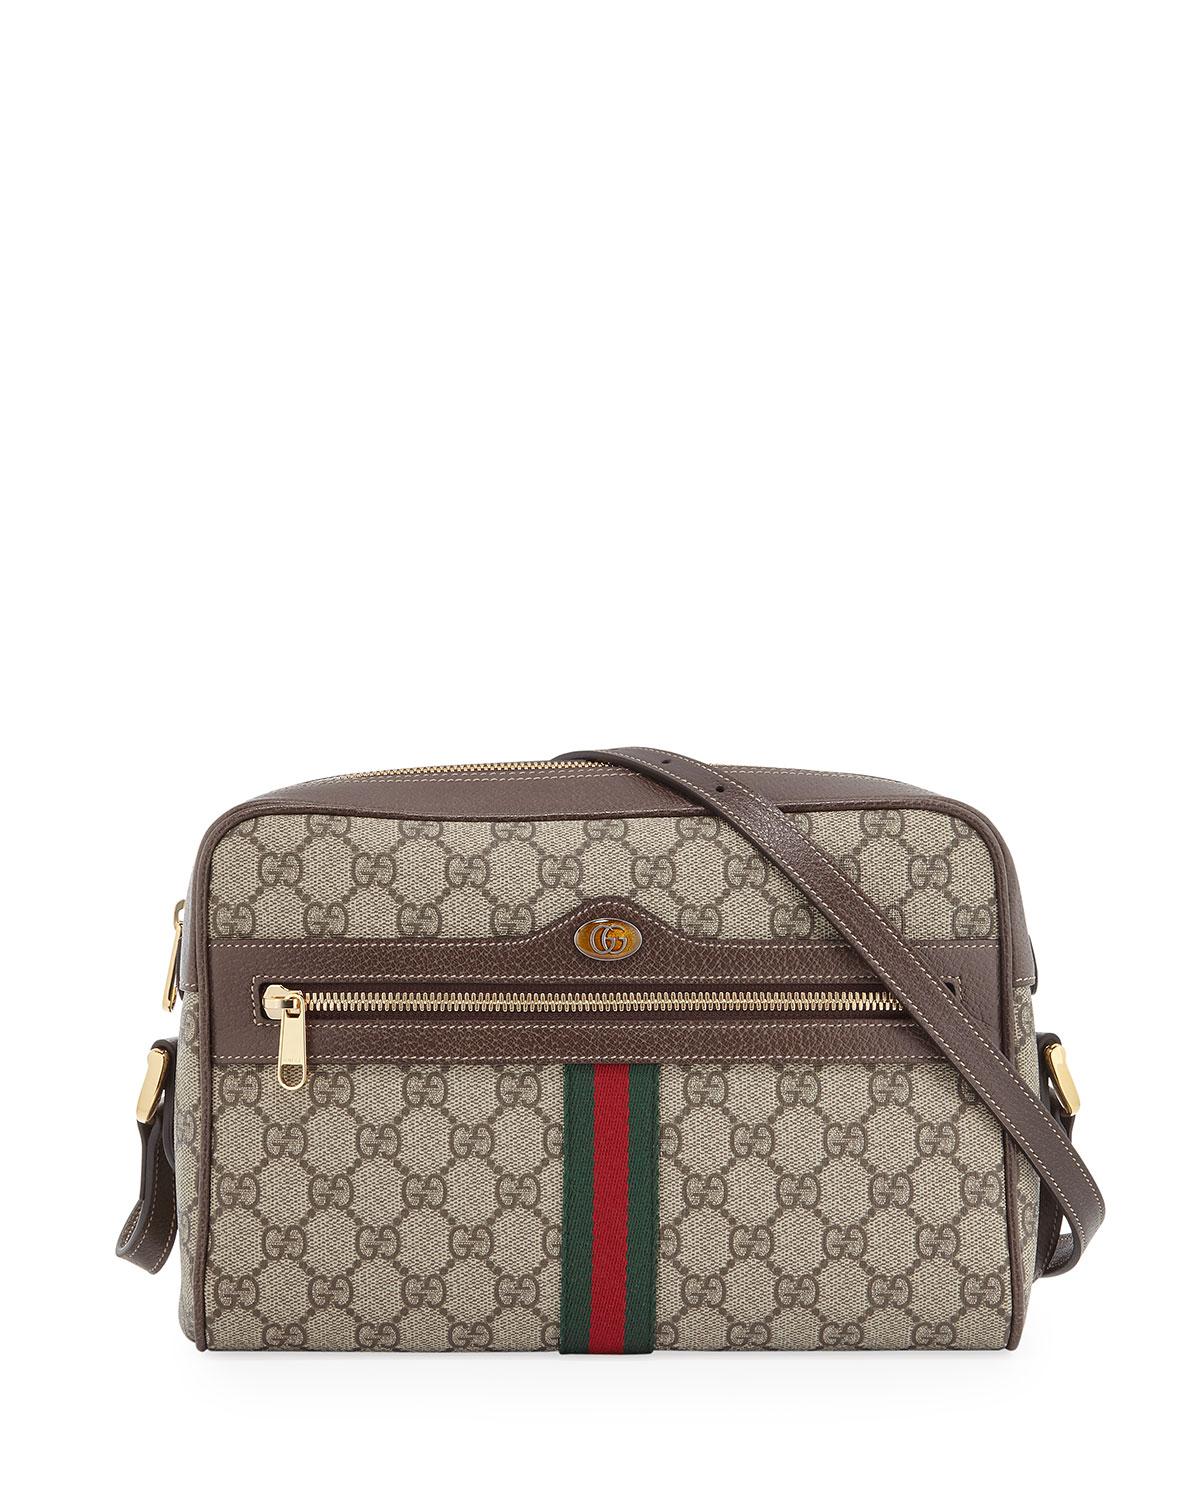 Gucci Ophidia Medium GG Supreme Camera Crossbody Bag in Natural - Lyst